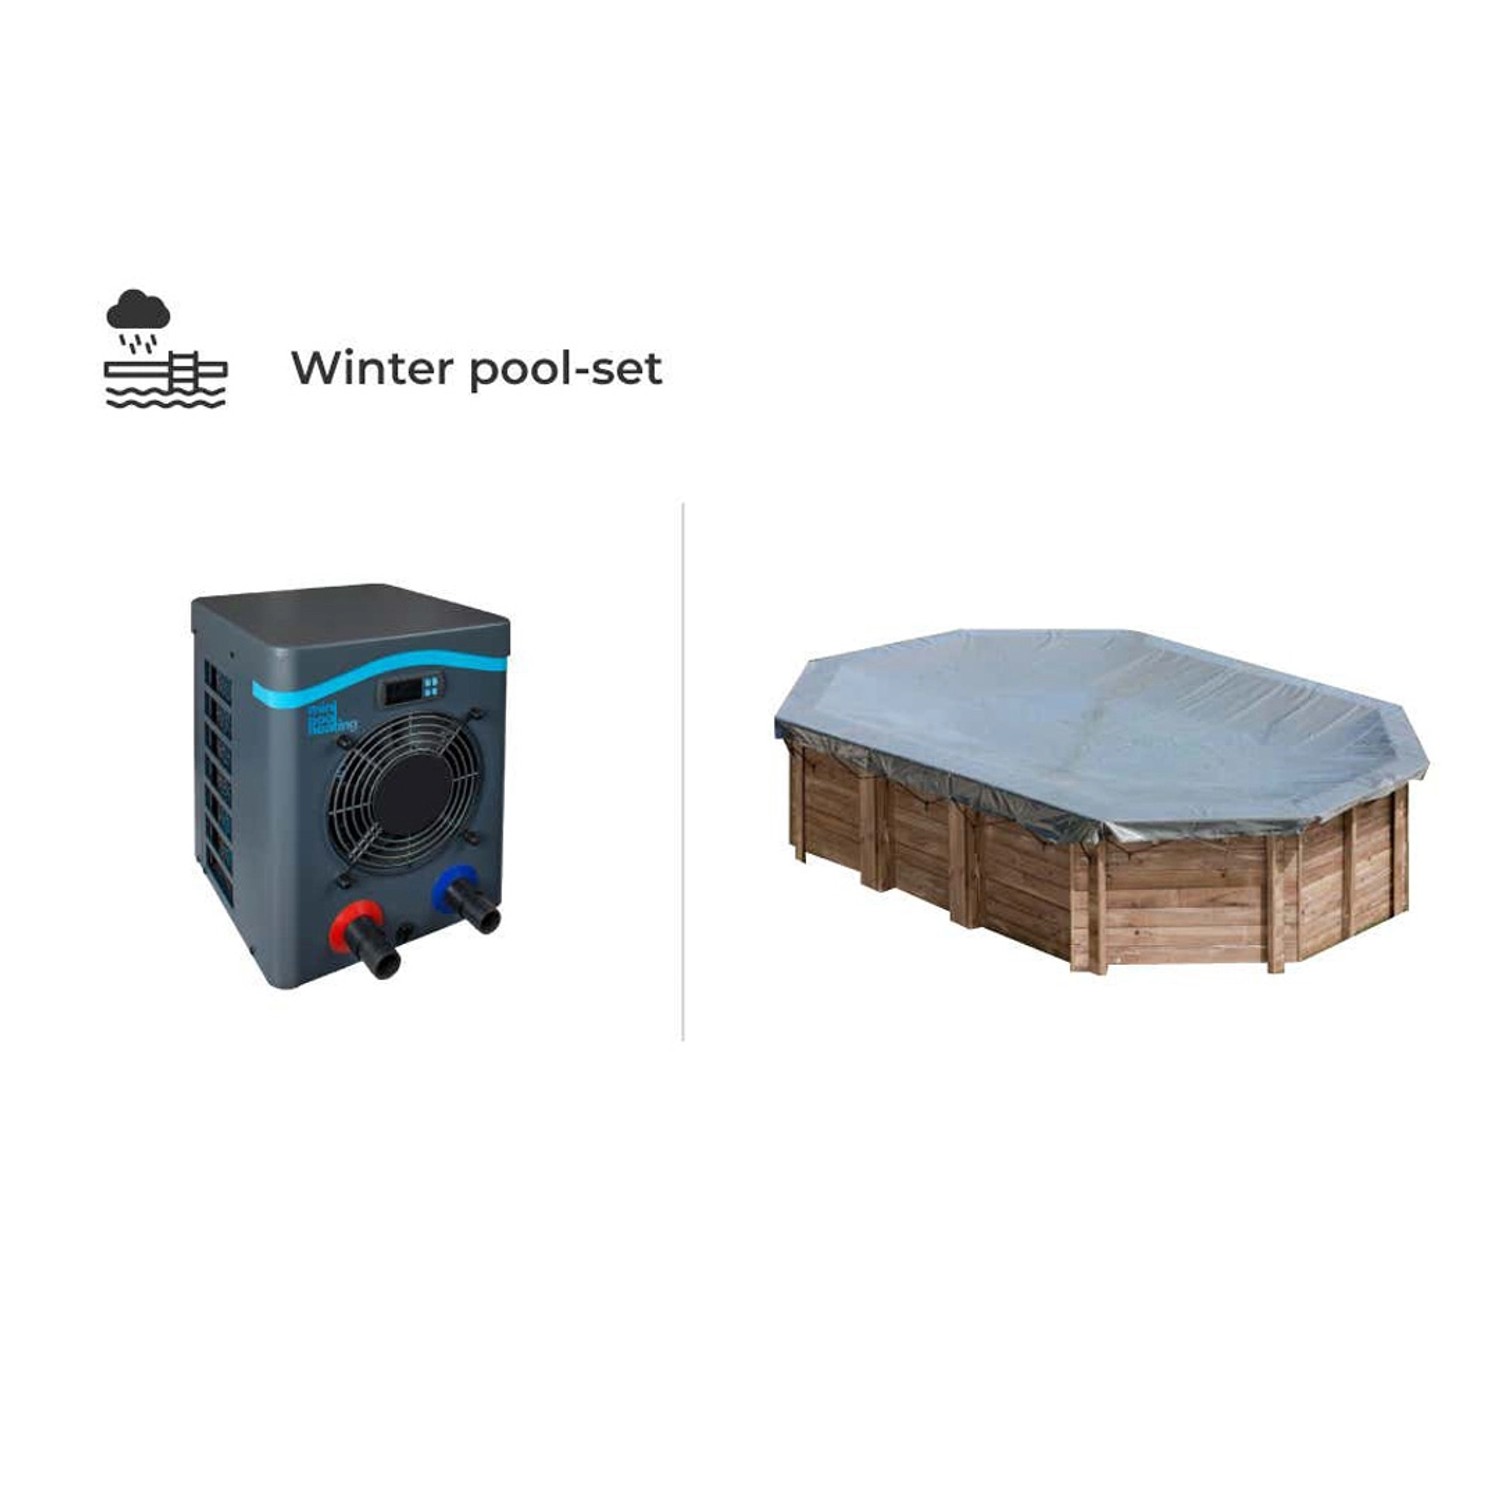 Poolcrew Winter-Pool-Set Lanzarote Wärmepumpe mit Abdeckplane von Poolcrew